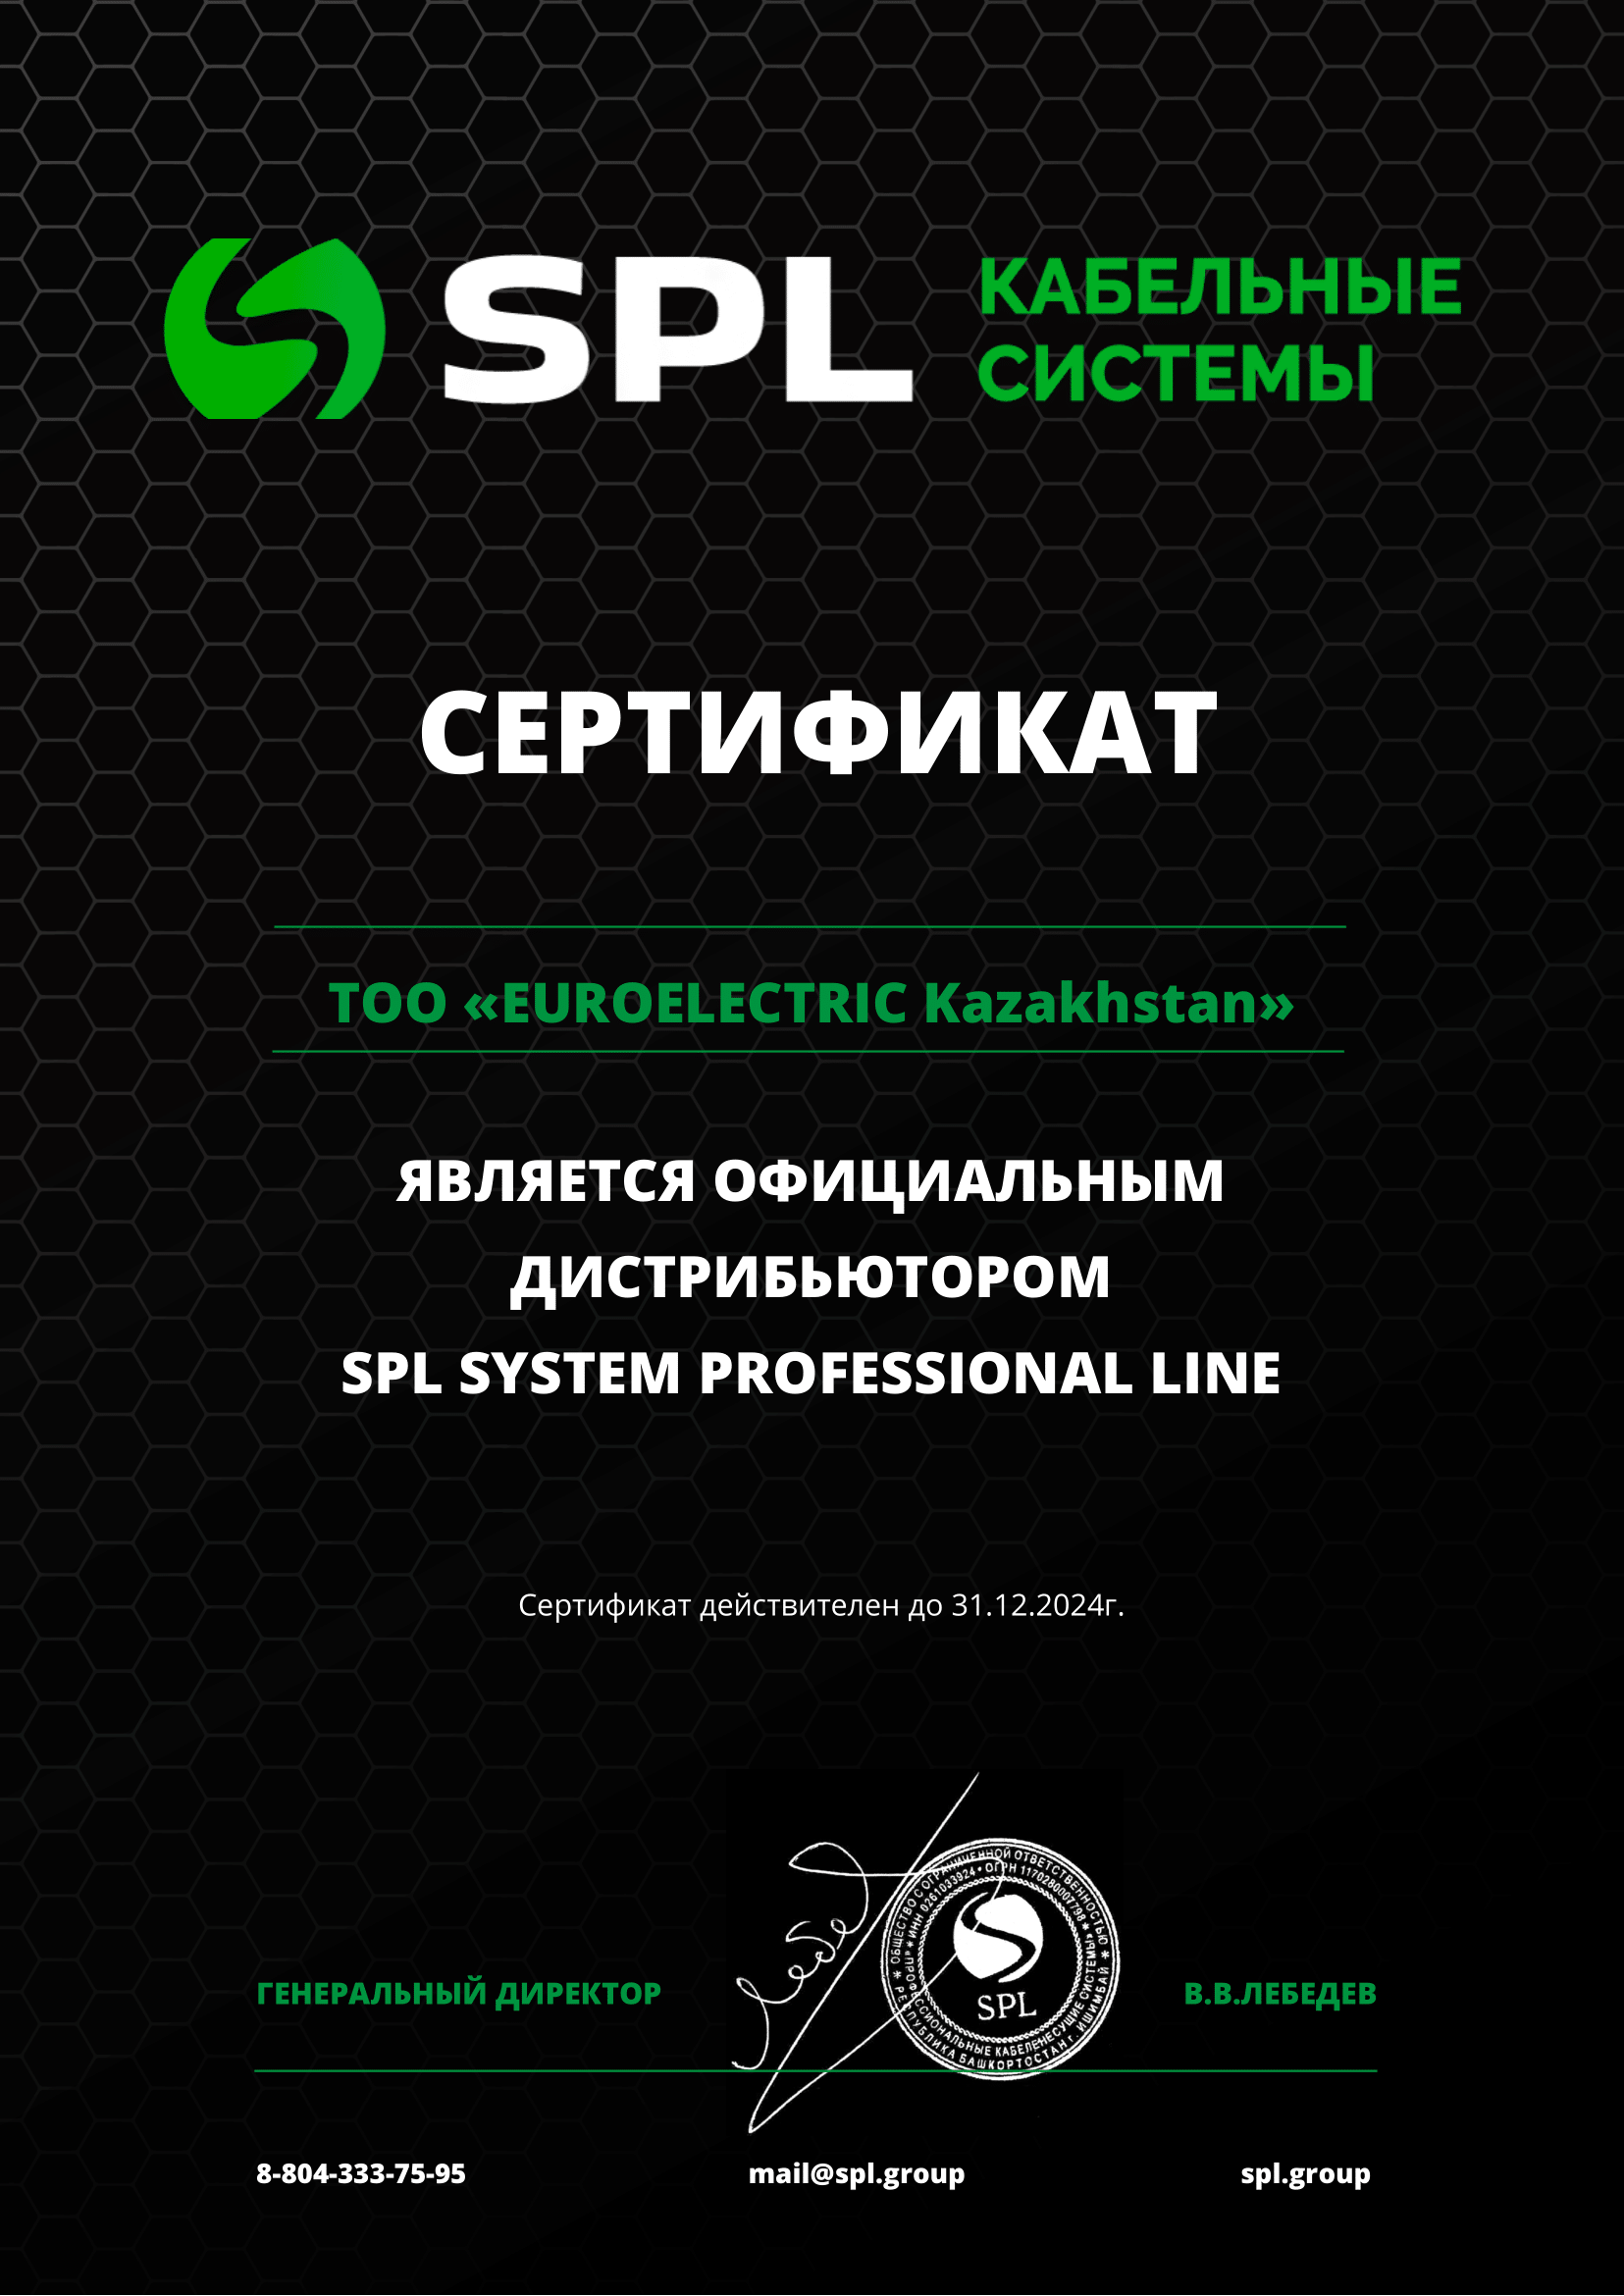 Сертификат SPL